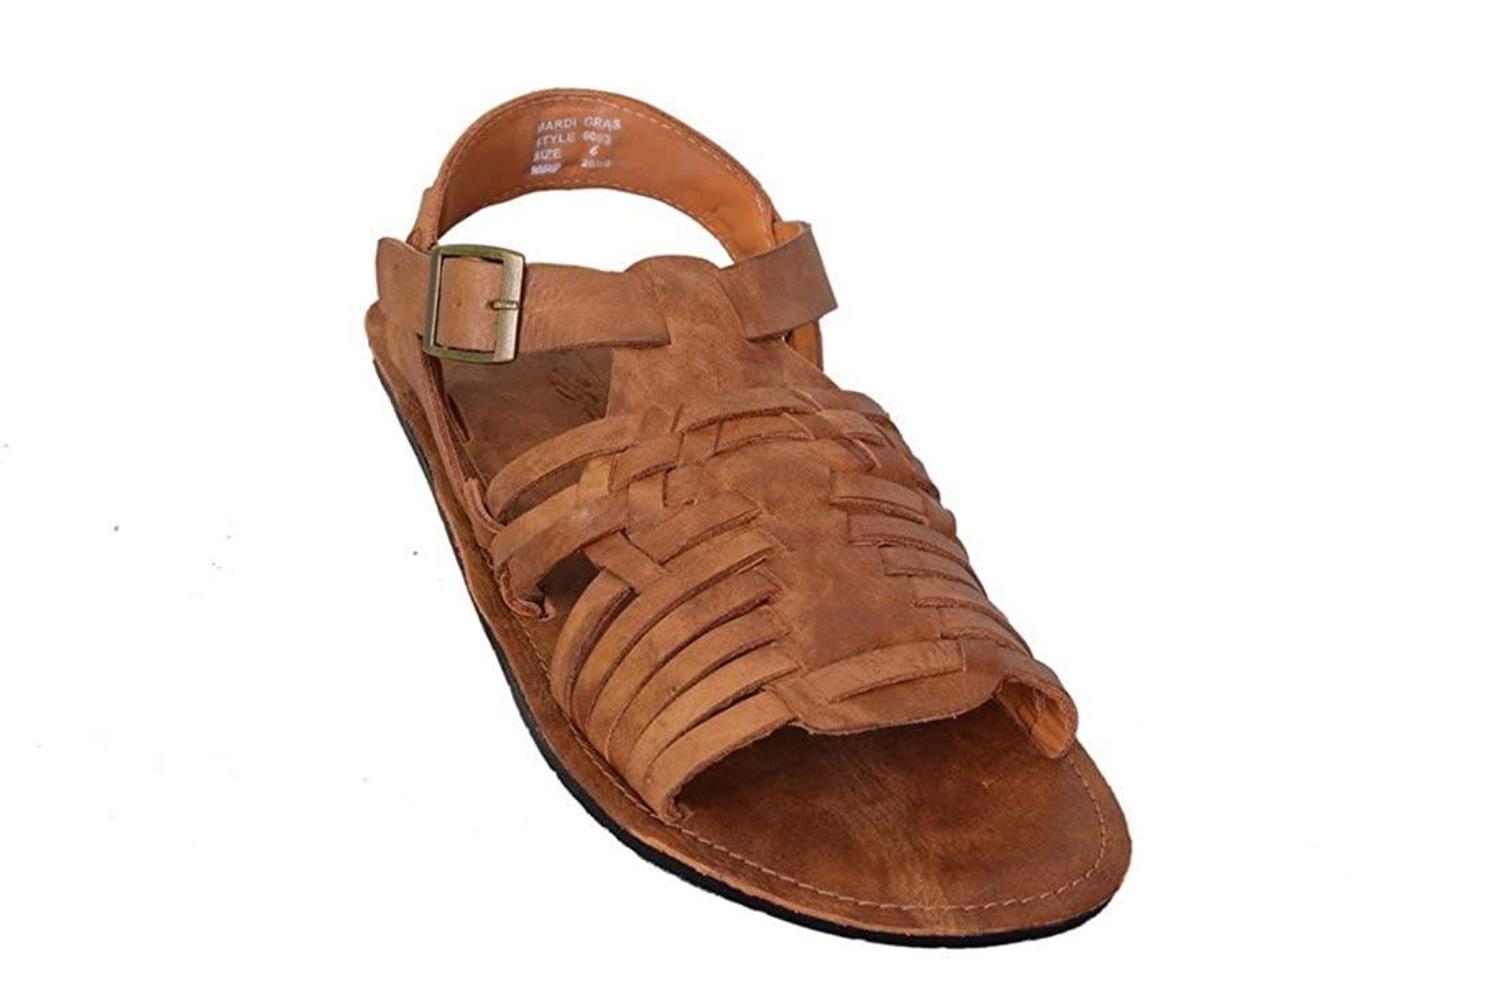 Tan Leather Multi Strap Single Toed Sandals for Men - Mardi Gras